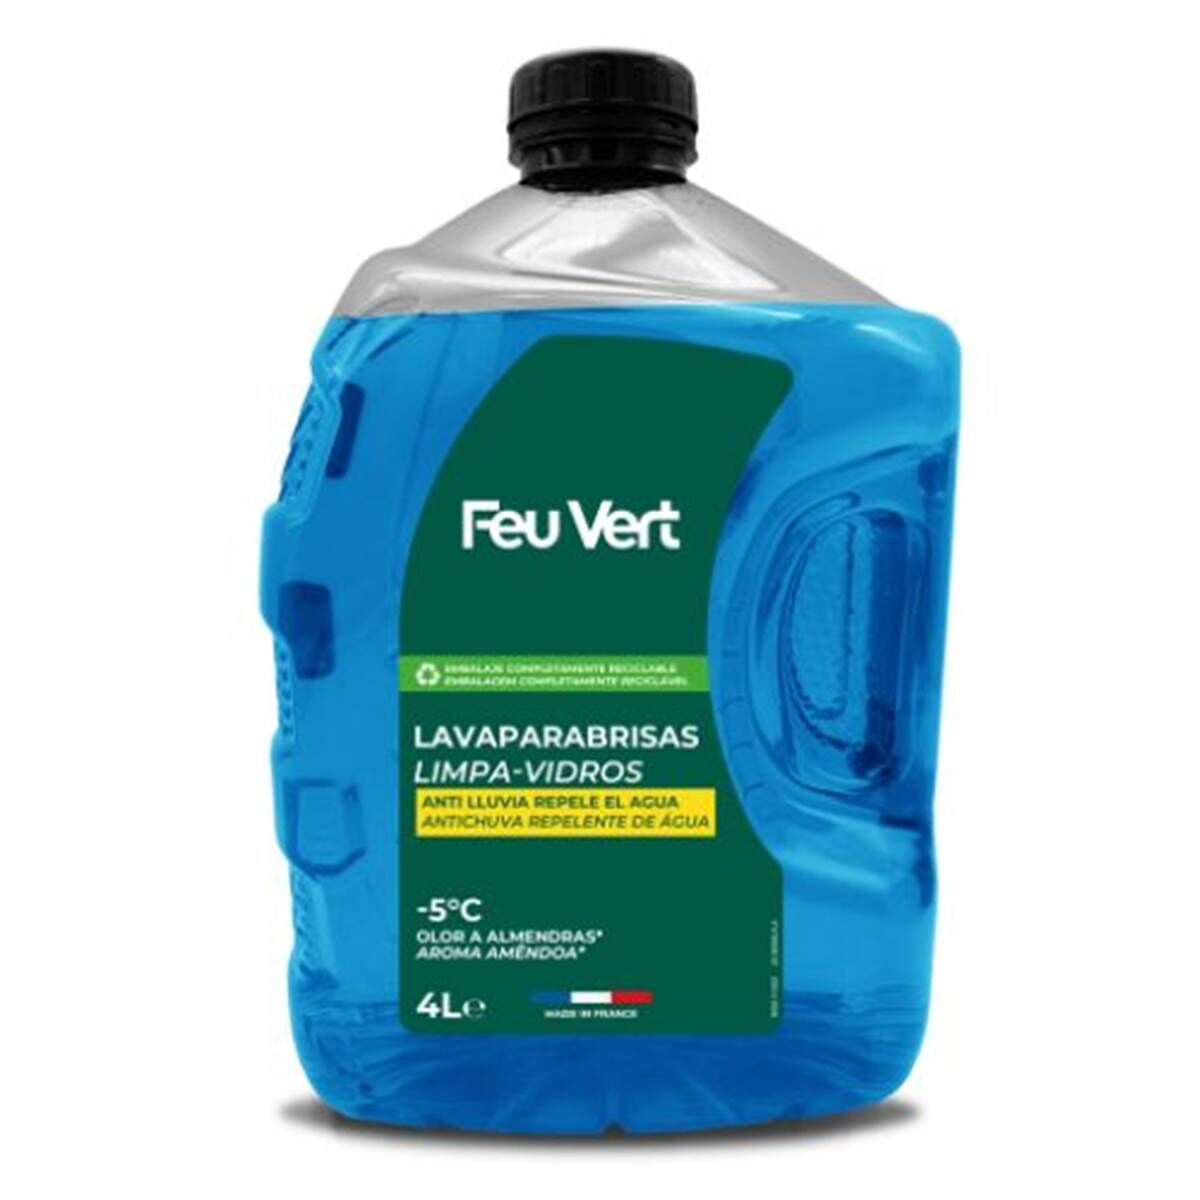 Feu Vert Lavaparabrisas antilluvia -5ºc  4l